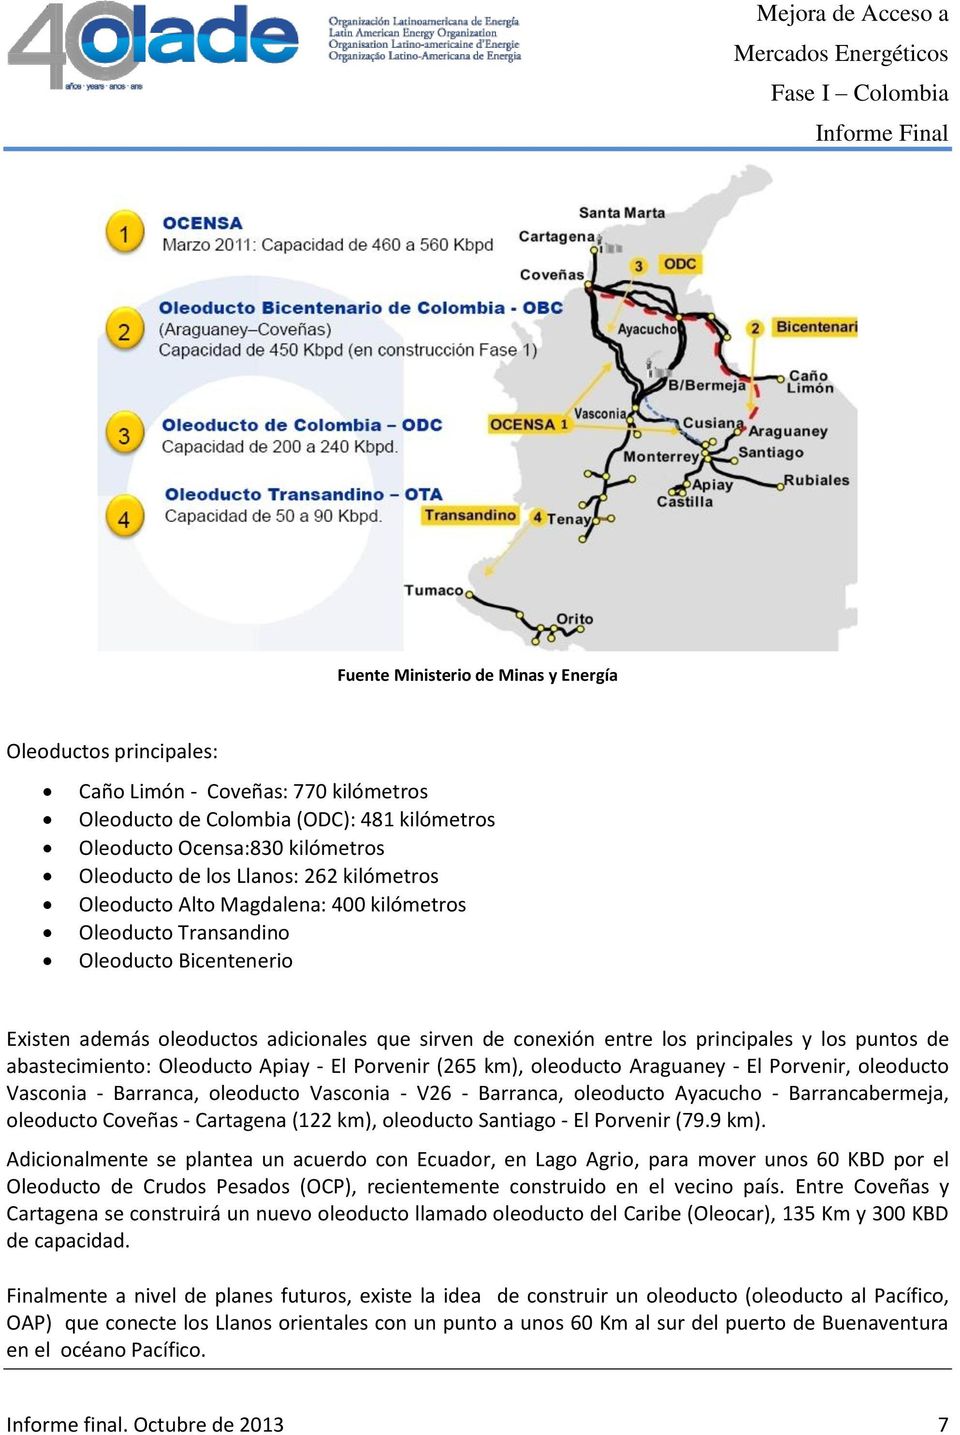 abastecimiento: Oleoducto Apiay - El Porvenir (265 km), oleoducto Araguaney - El Porvenir, oleoducto Vasconia - Barranca, oleoducto Vasconia - V26 - Barranca, oleoducto Ayacucho - Barrancabermeja,